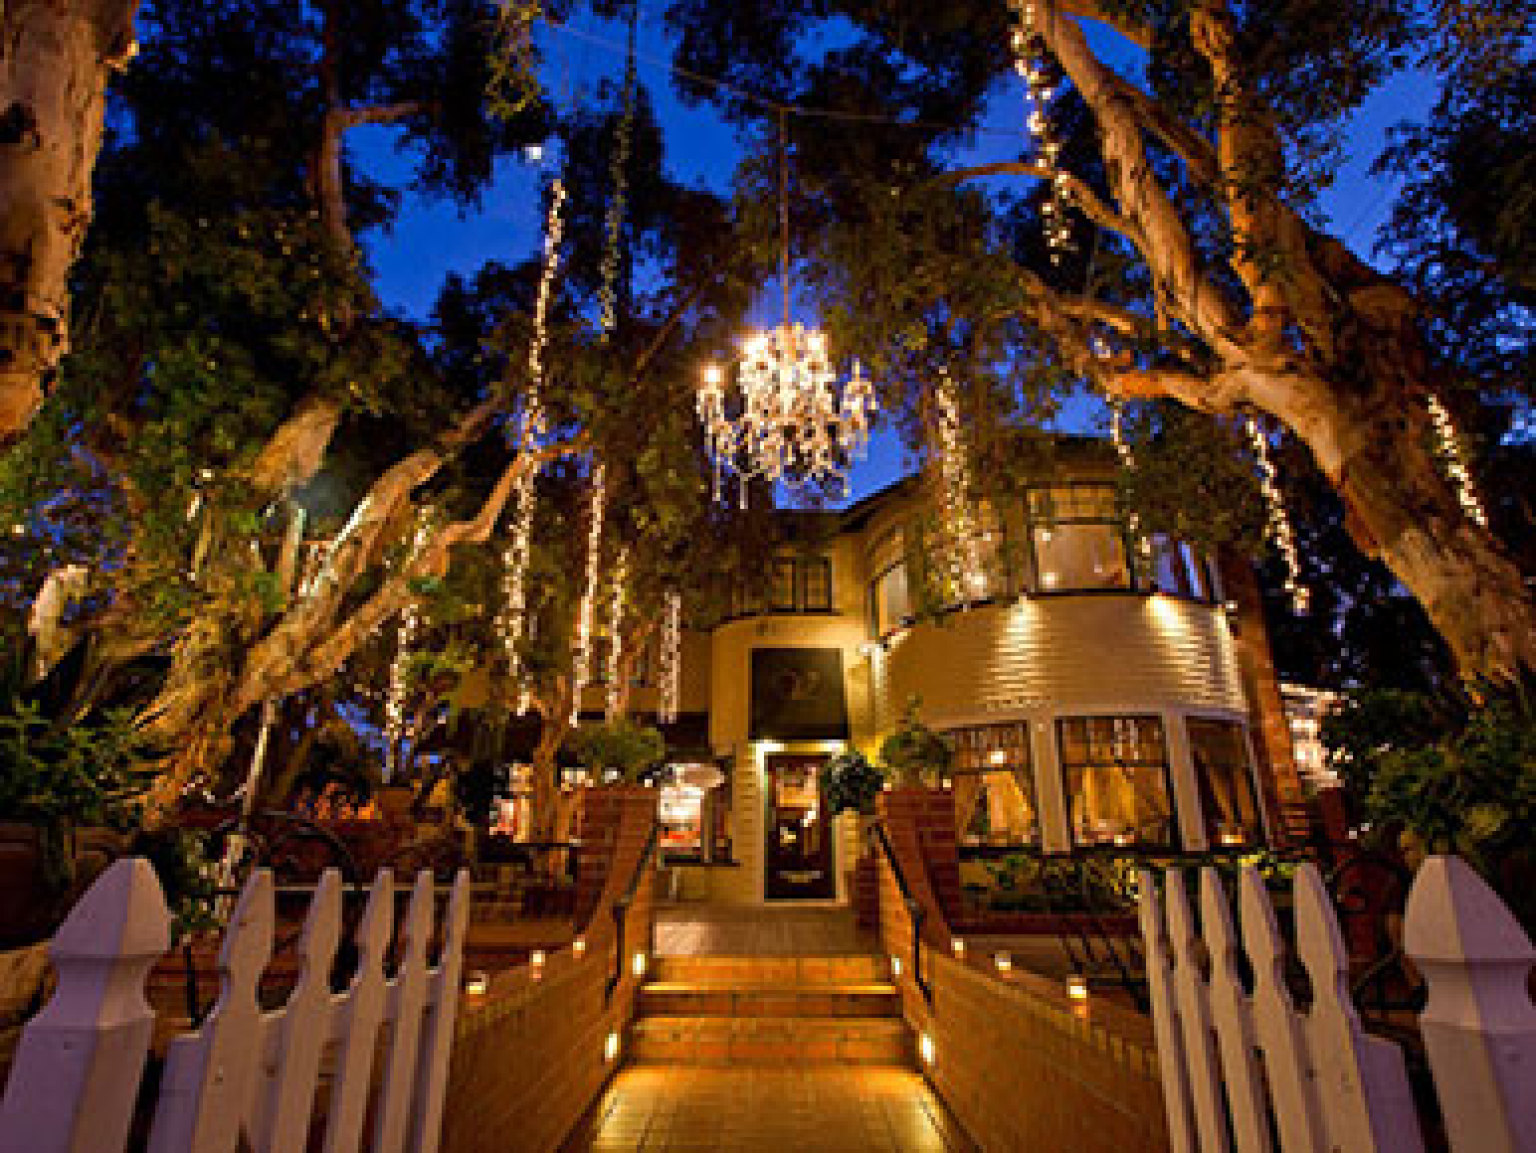 LA Wedding Venues: Best Restaurants, Museums & Gardens (PHOTOS)